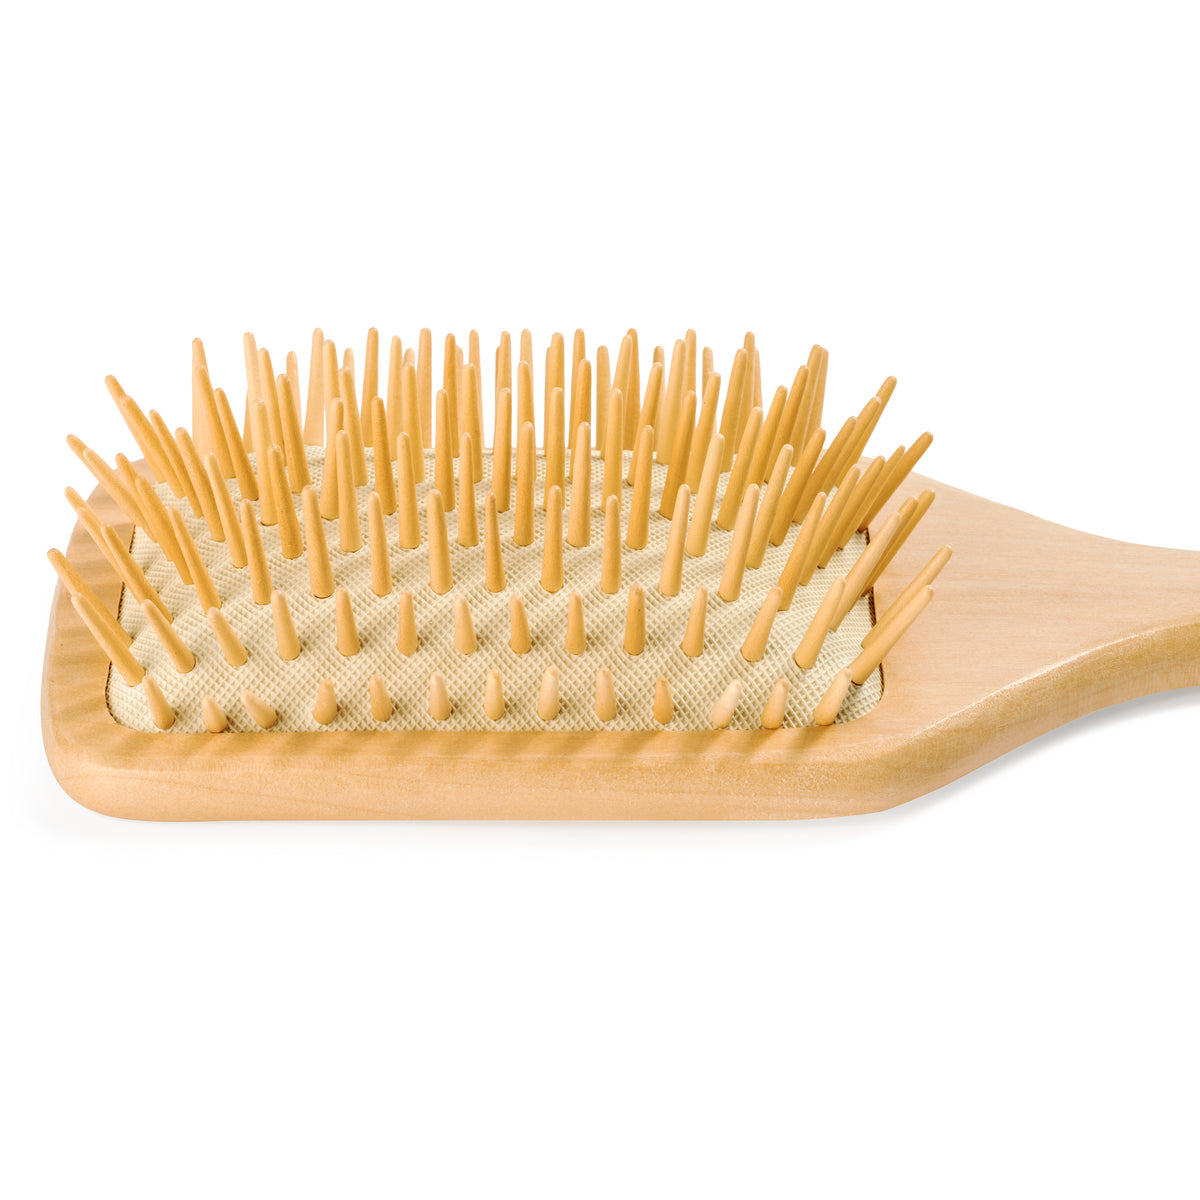 Glasgow Nylon Cleaning Brush 10 Inches Medium Bristles with Wood Handle